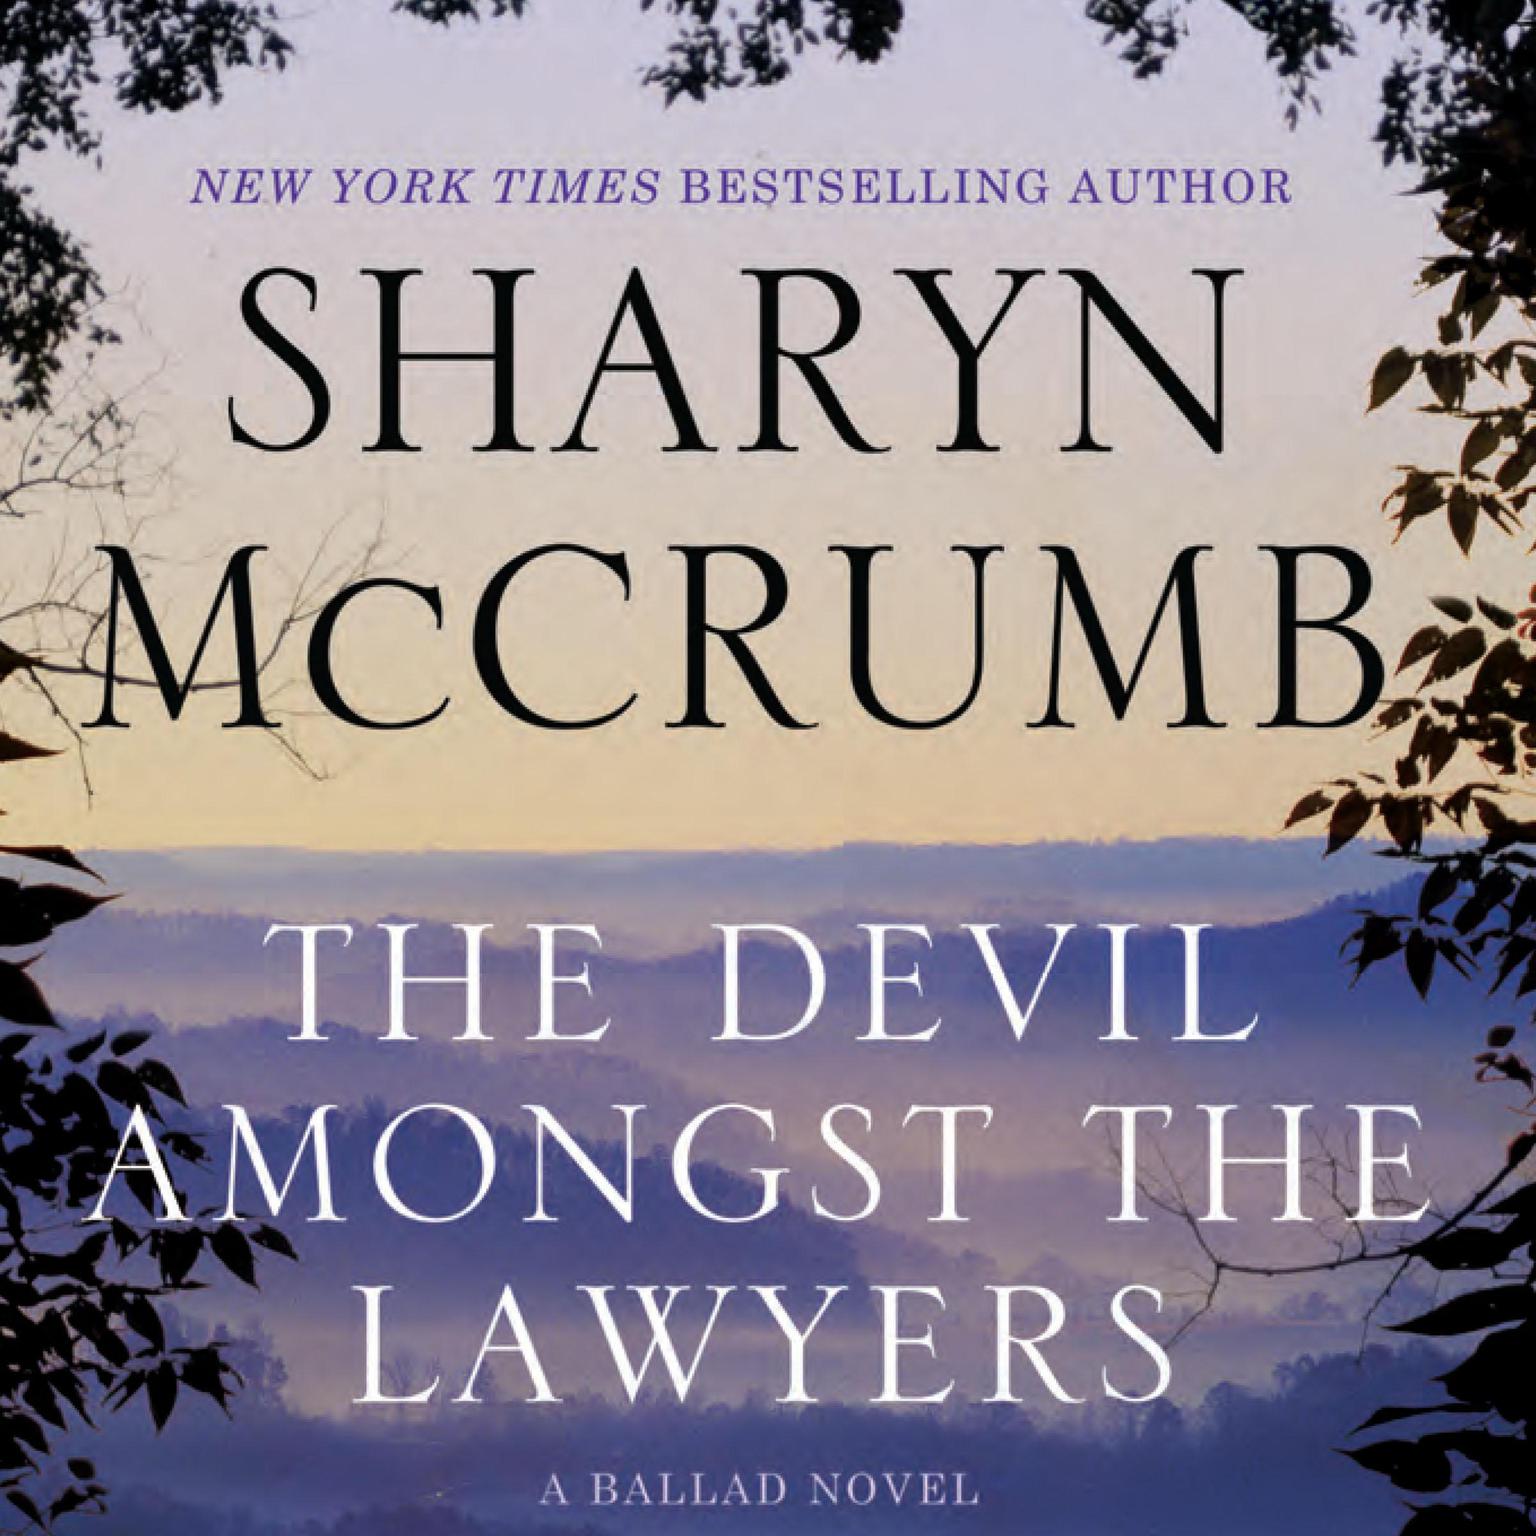 The Devil Amongst the Lawyers: A Ballad Novel Audiobook, by Sharyn McCrumb